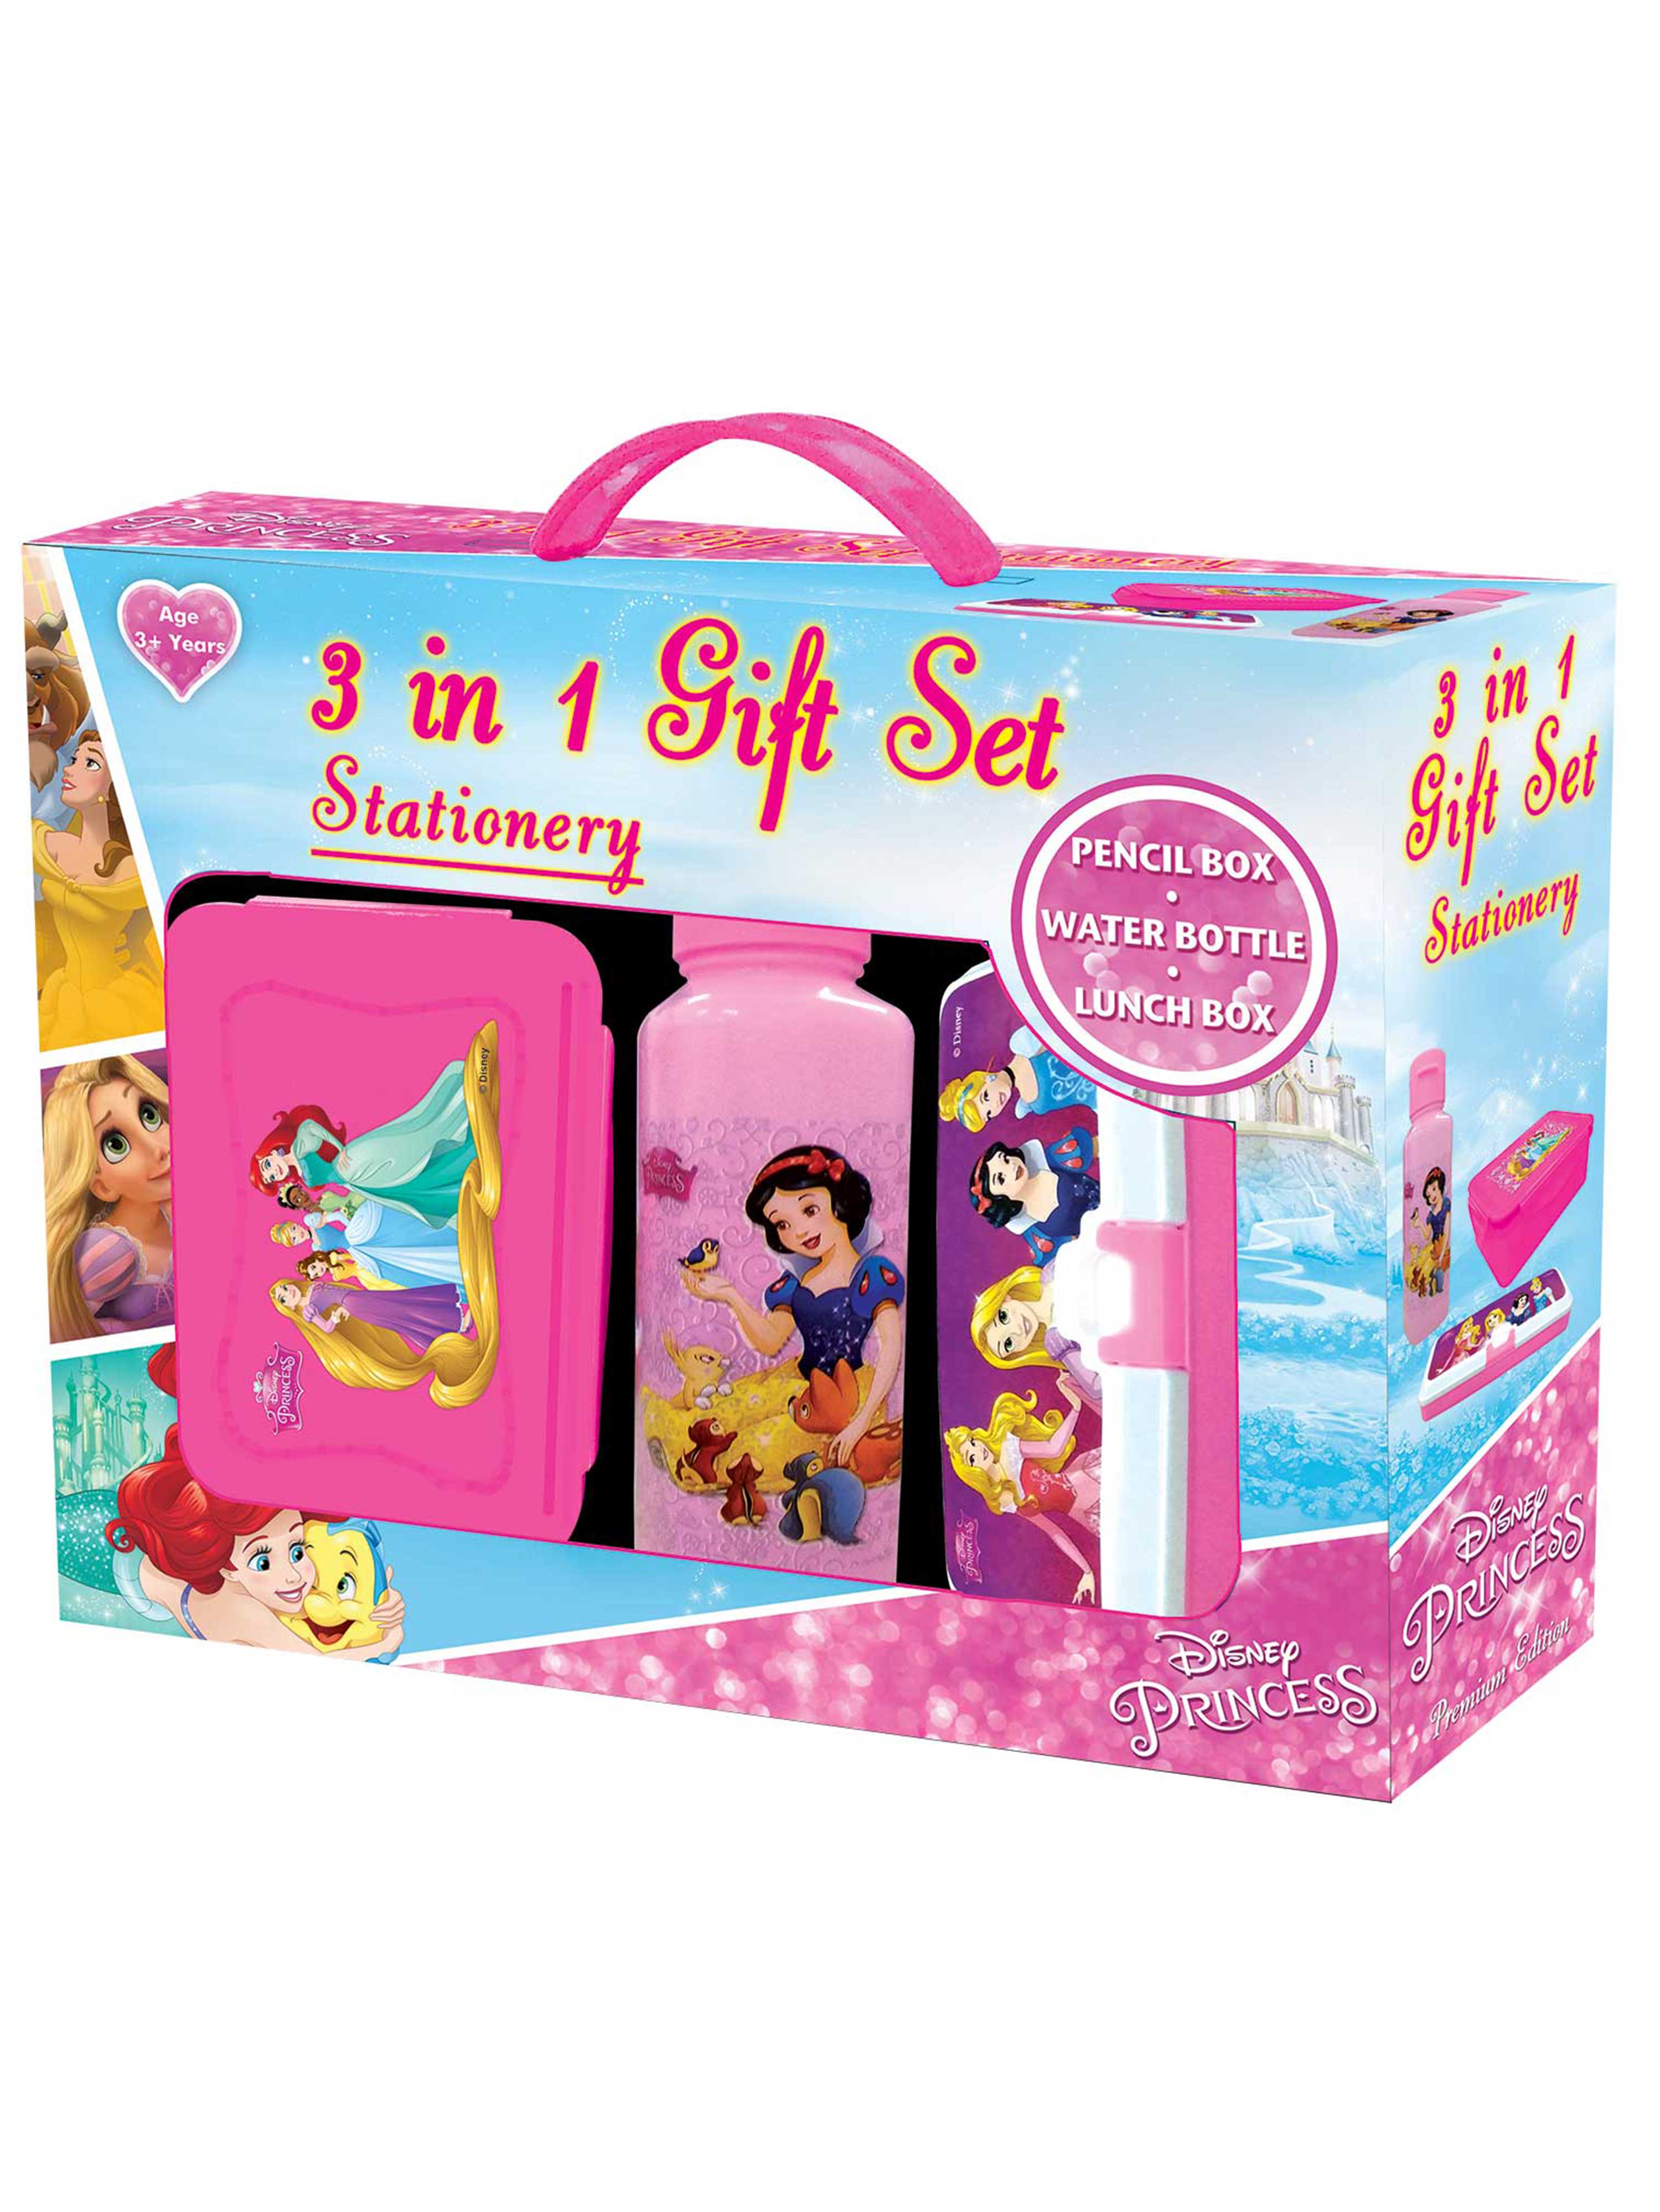 Disney Princess 3 in 1 Gift Set